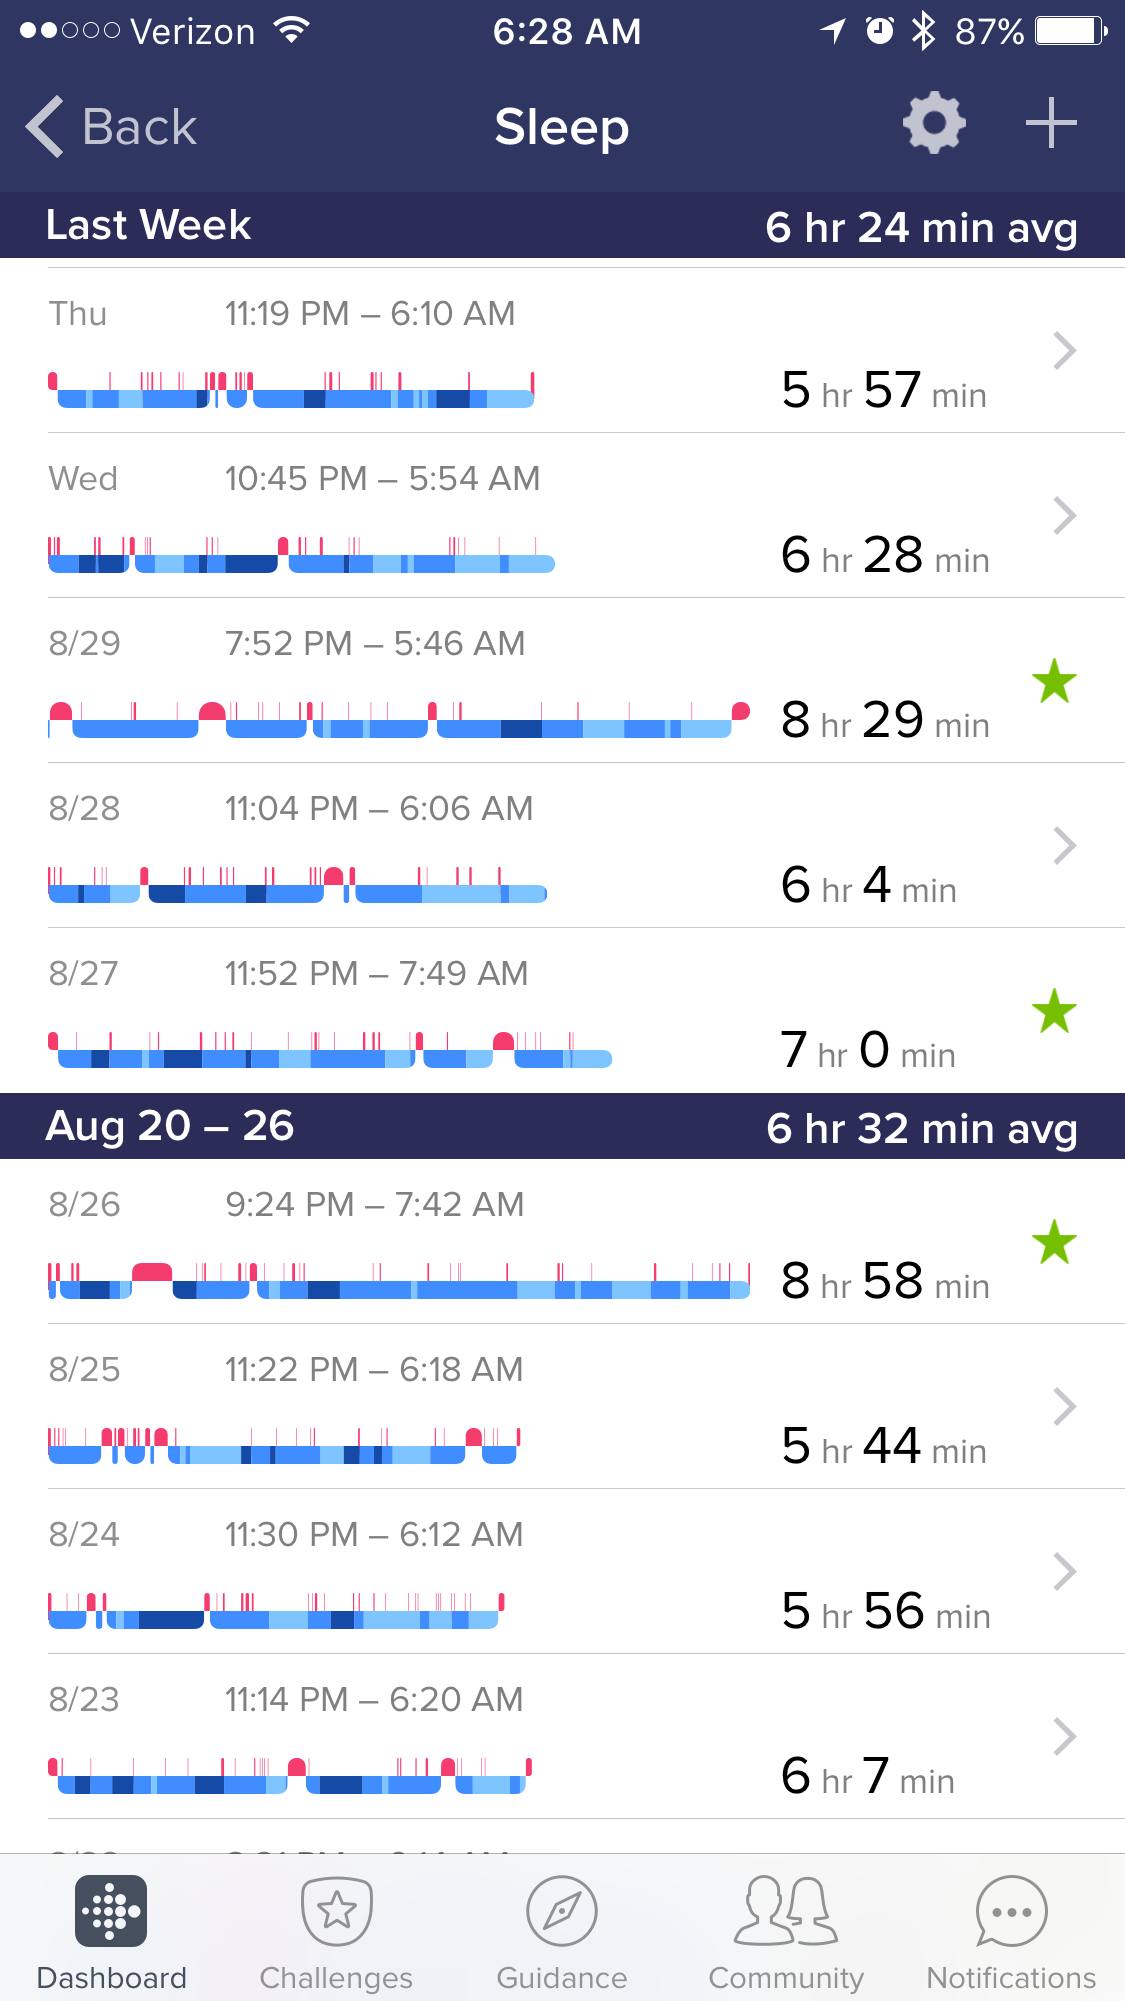 fitbit blaze stopped tracking sleep